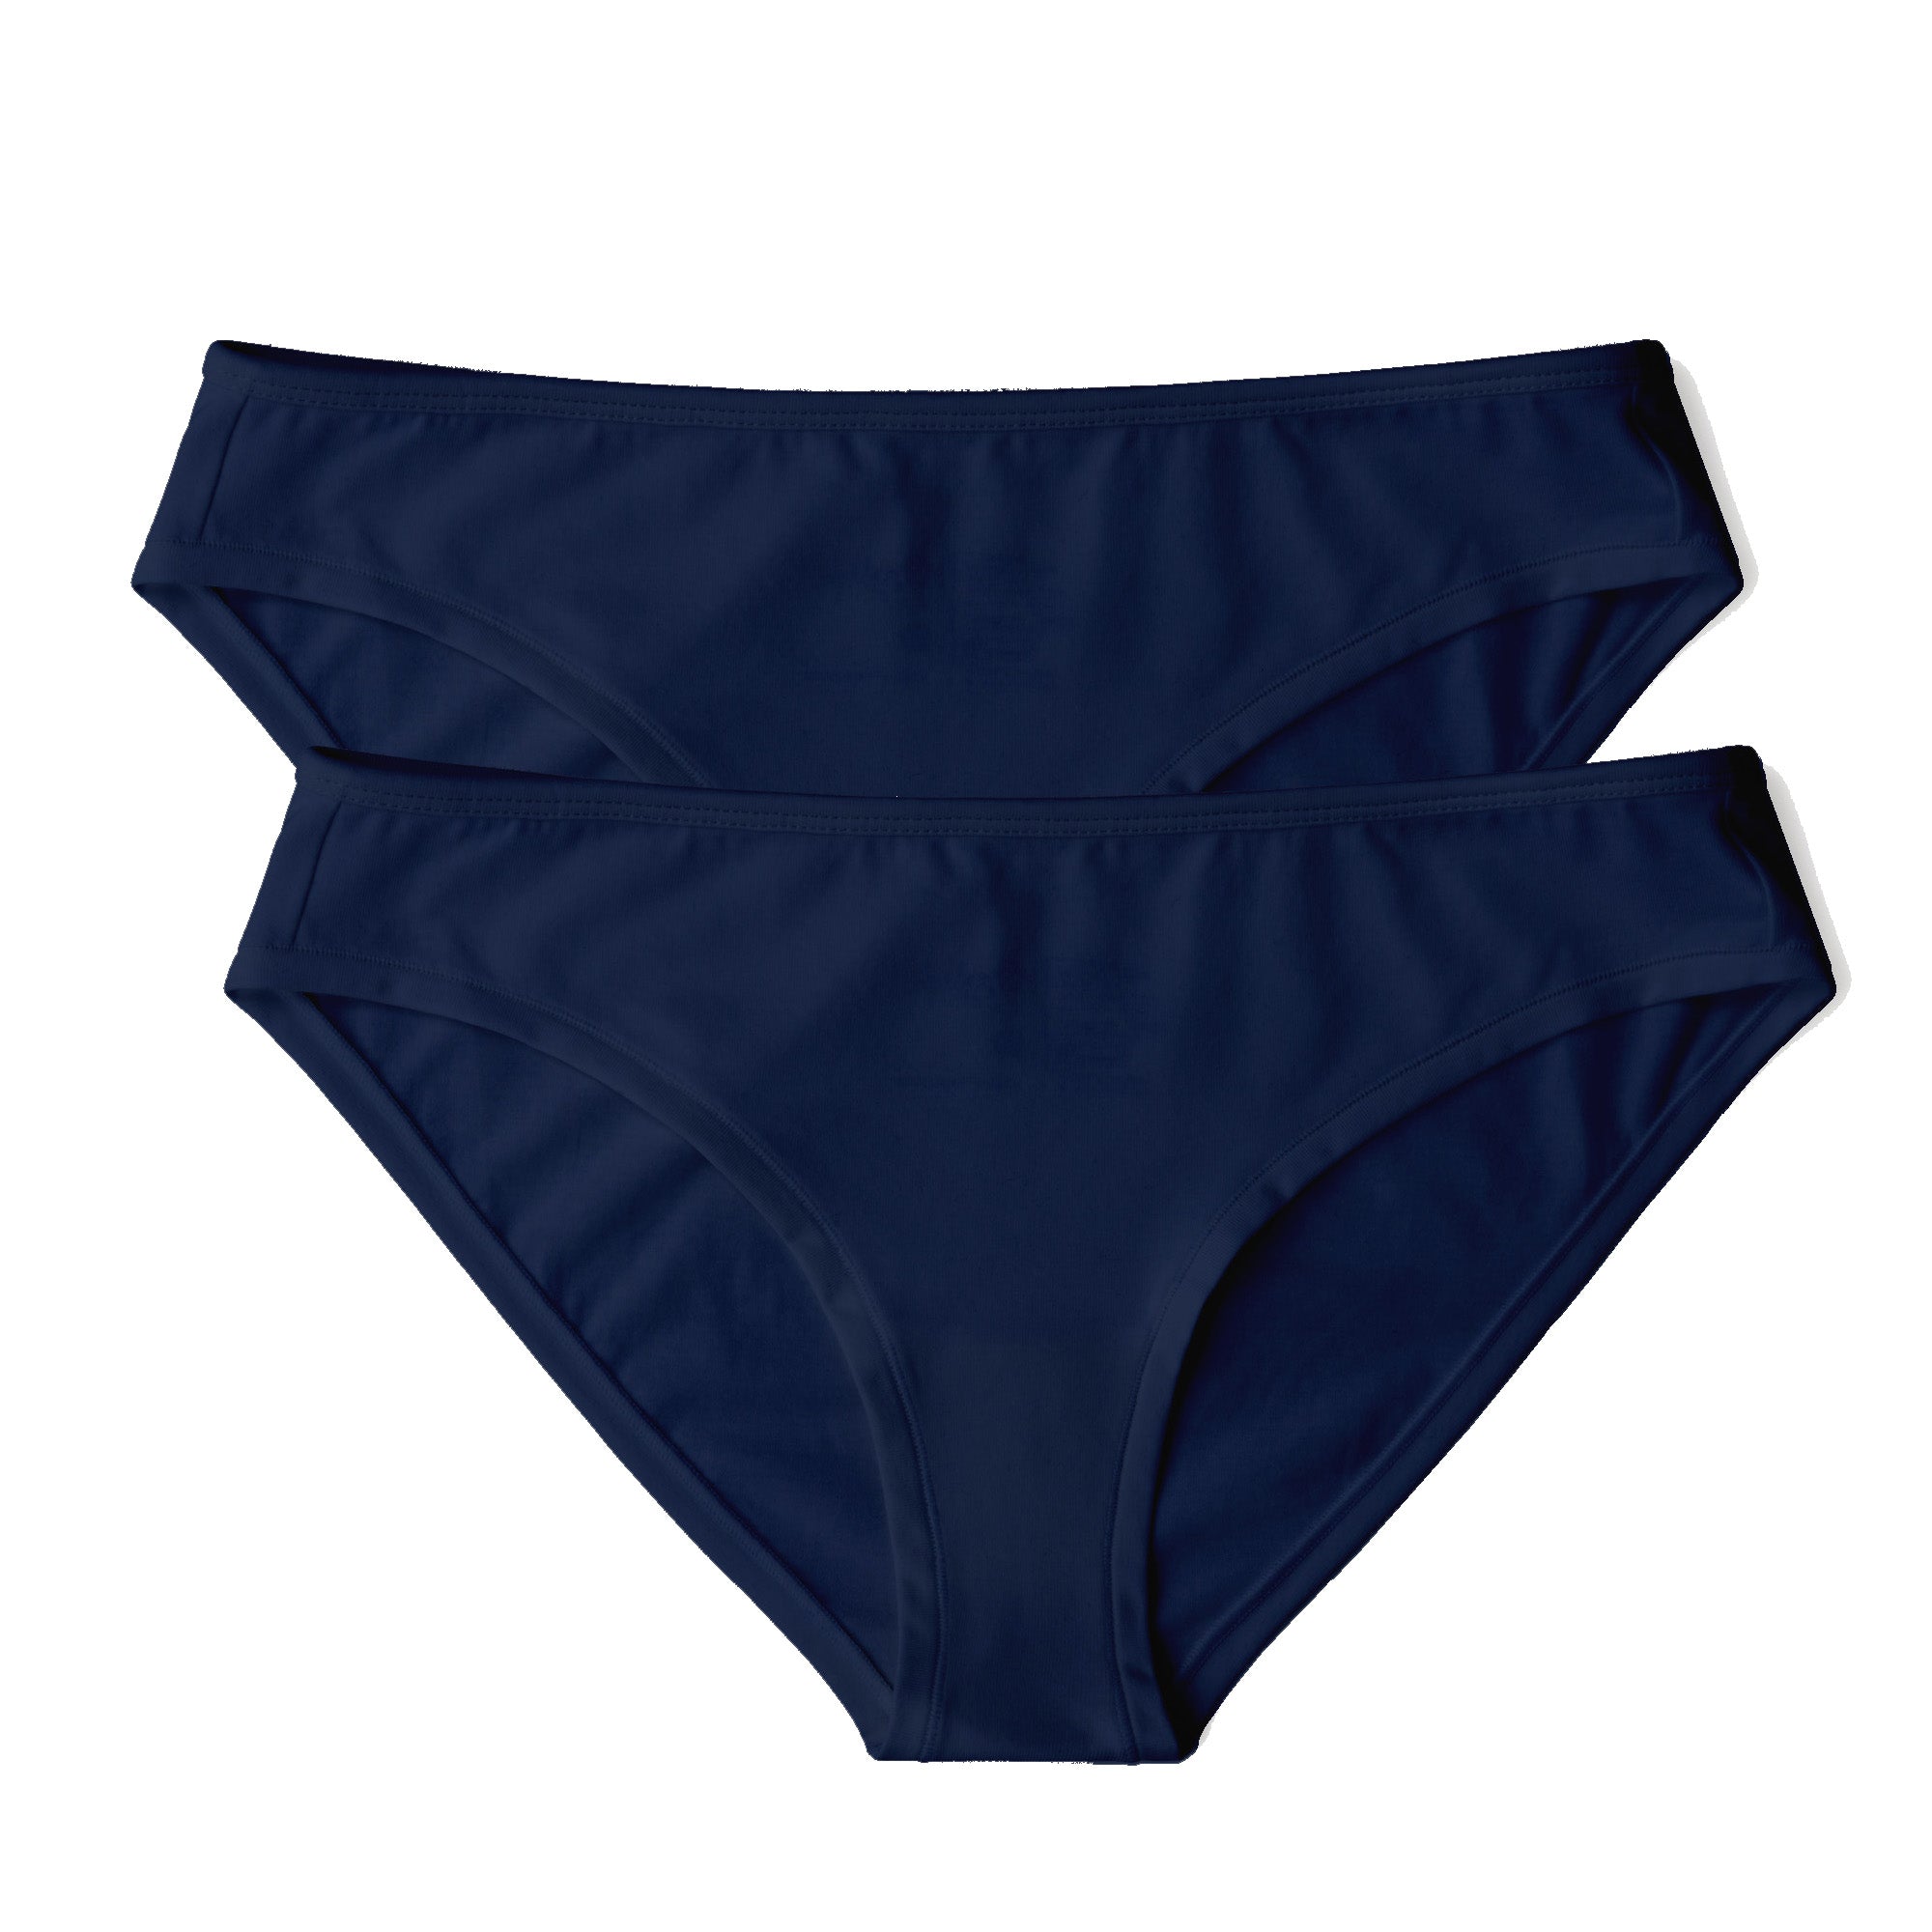 Lemon and Check Blue Women's Underwear Comfy Ladies Briefs Mid